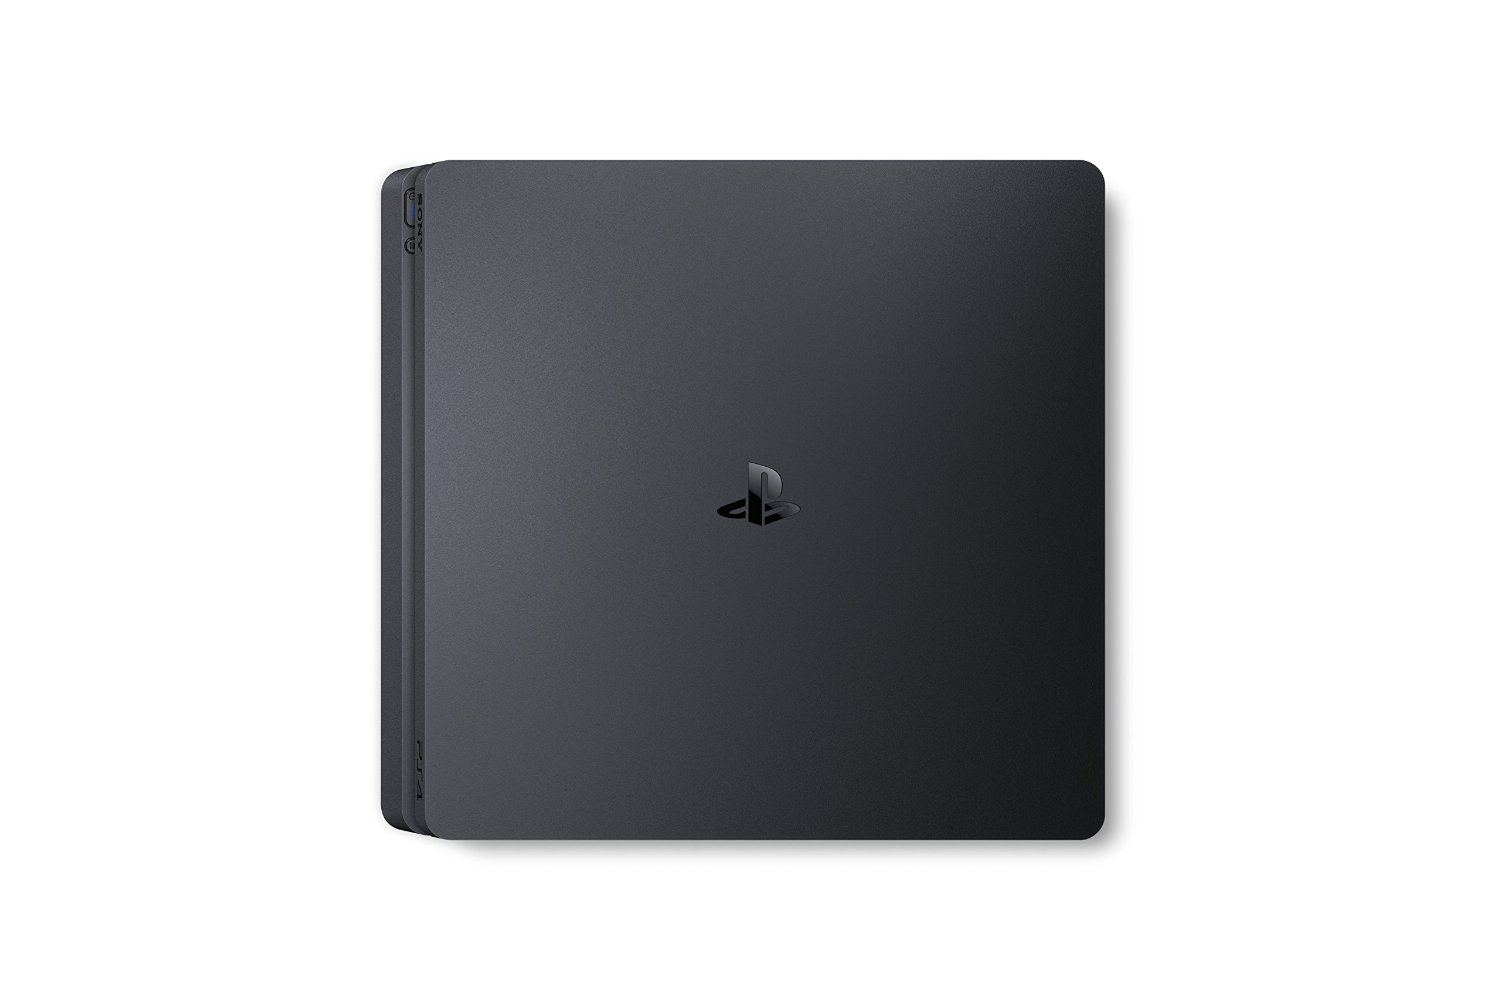 PlayStation 4 CUH-2000 Series 500GB HDD (Jet Black)